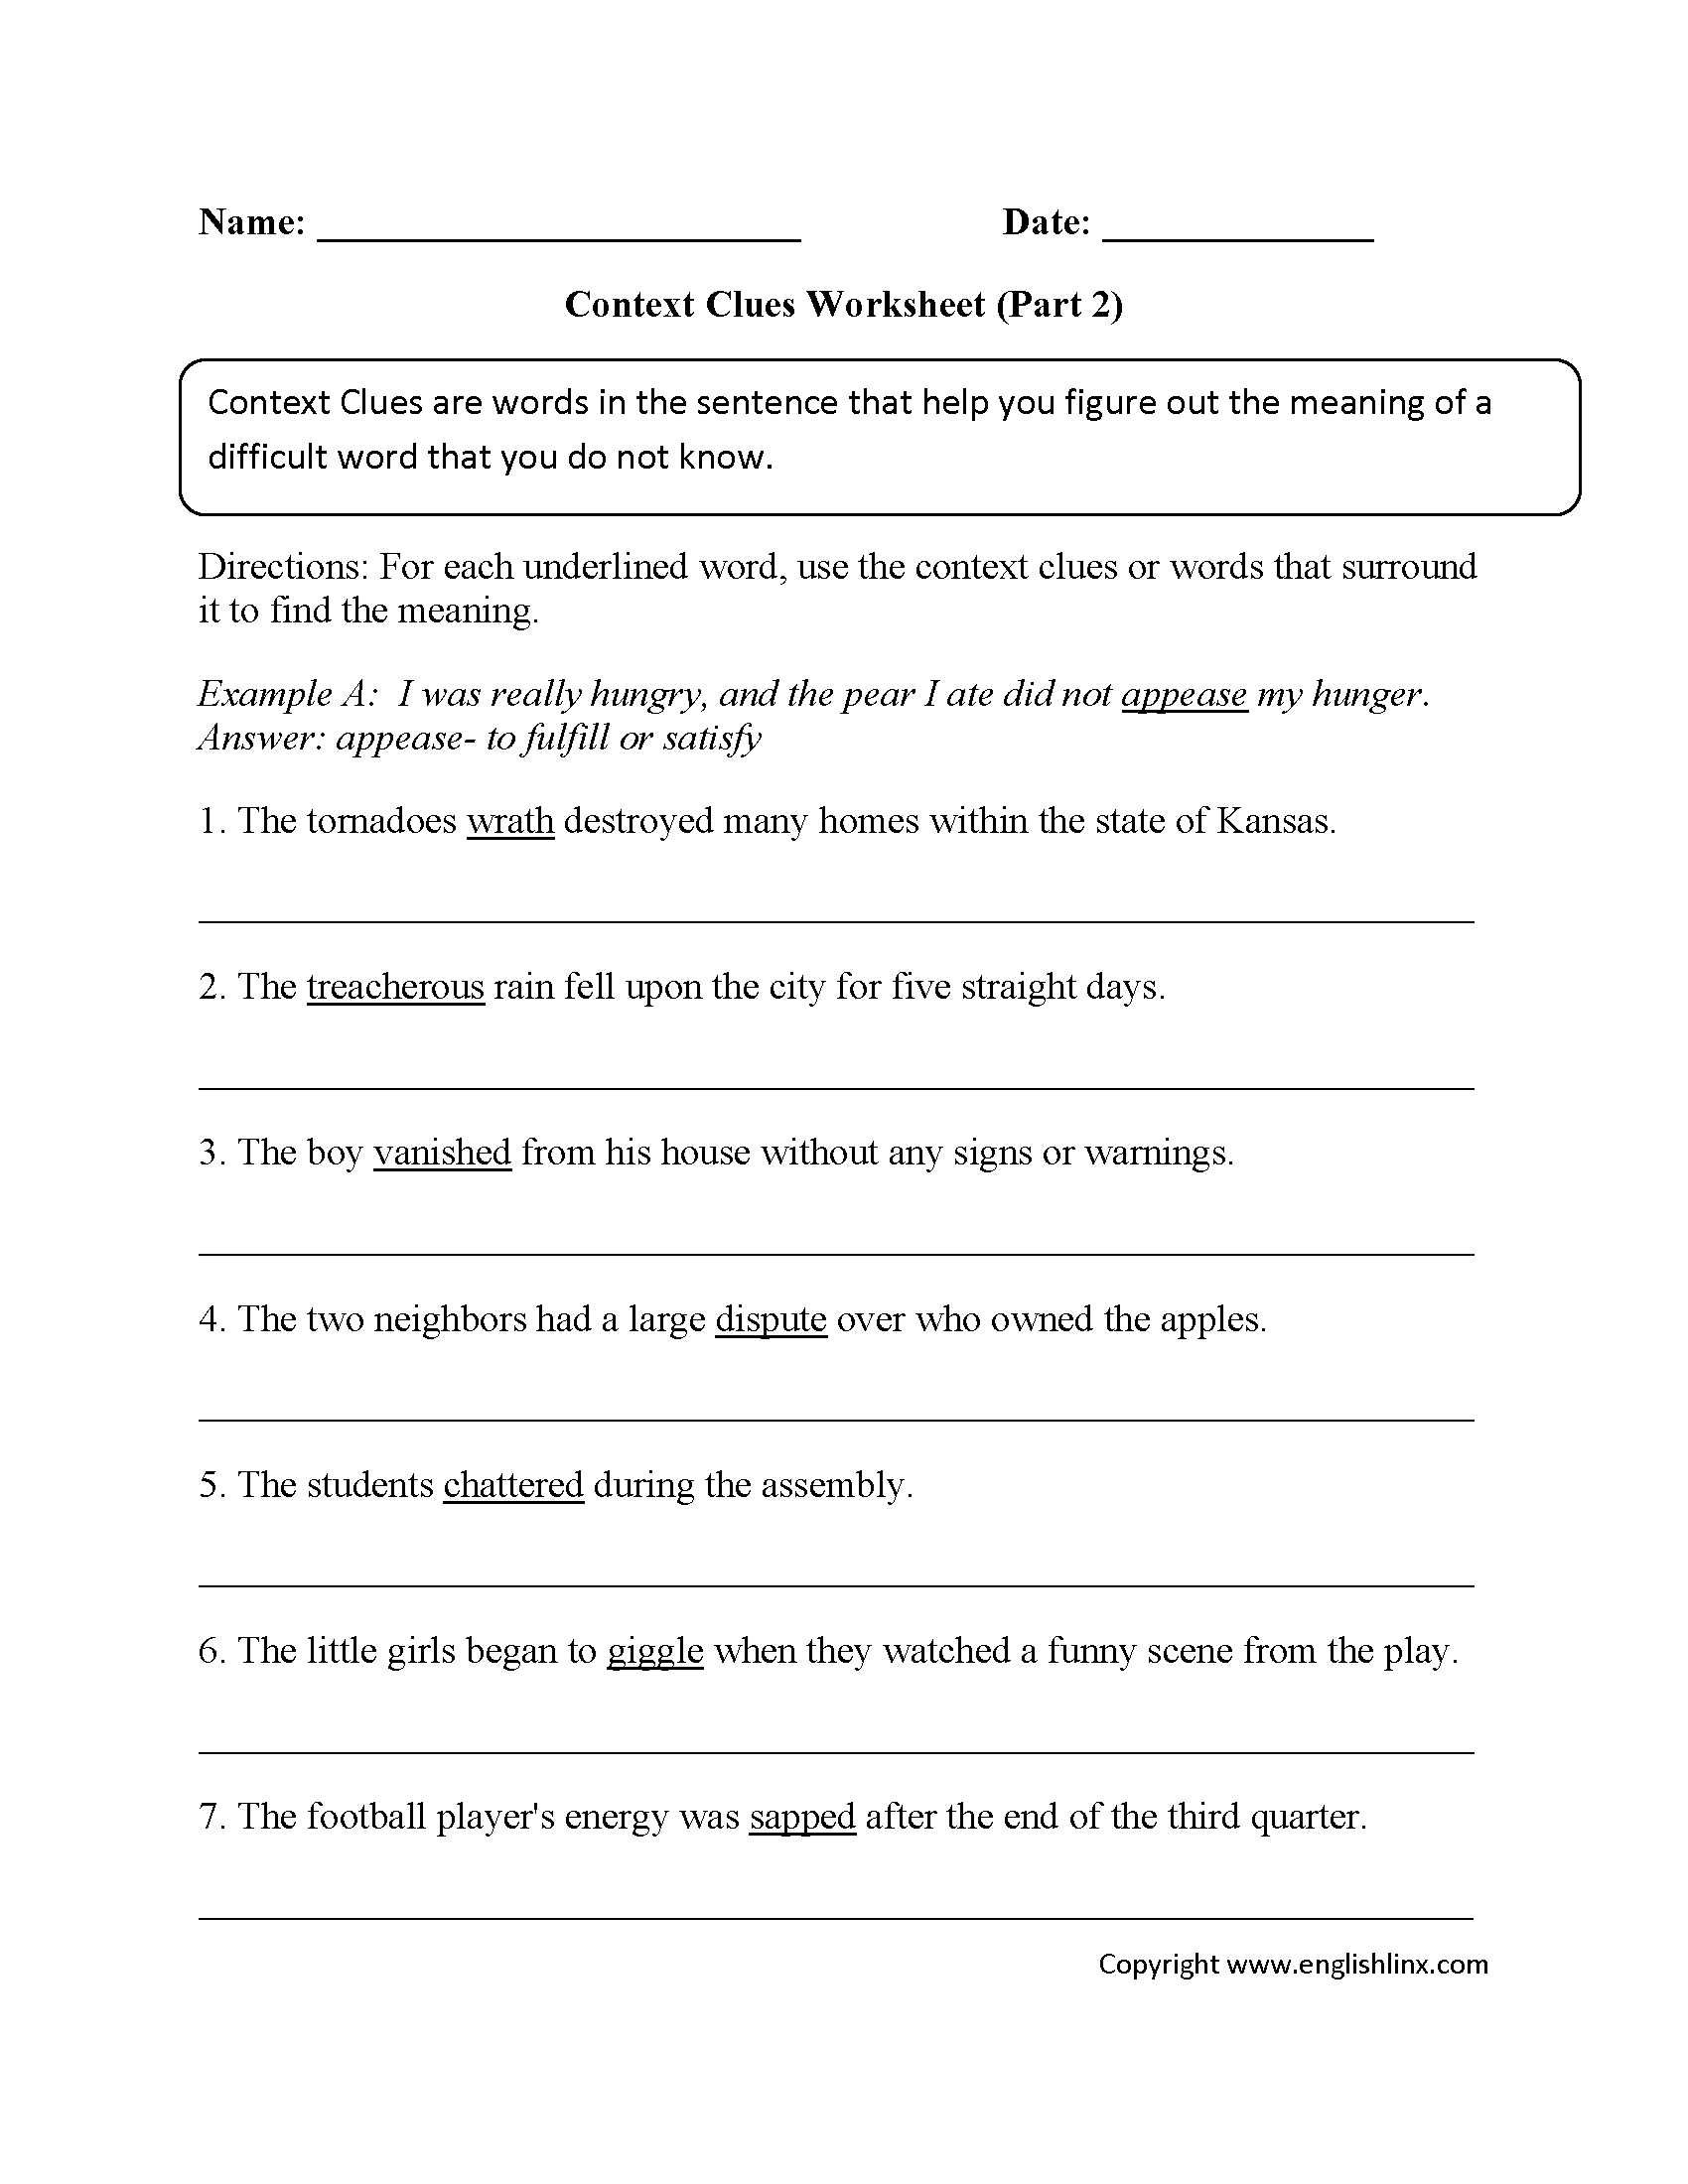 context-clues-worksheets-high-school-db-excel